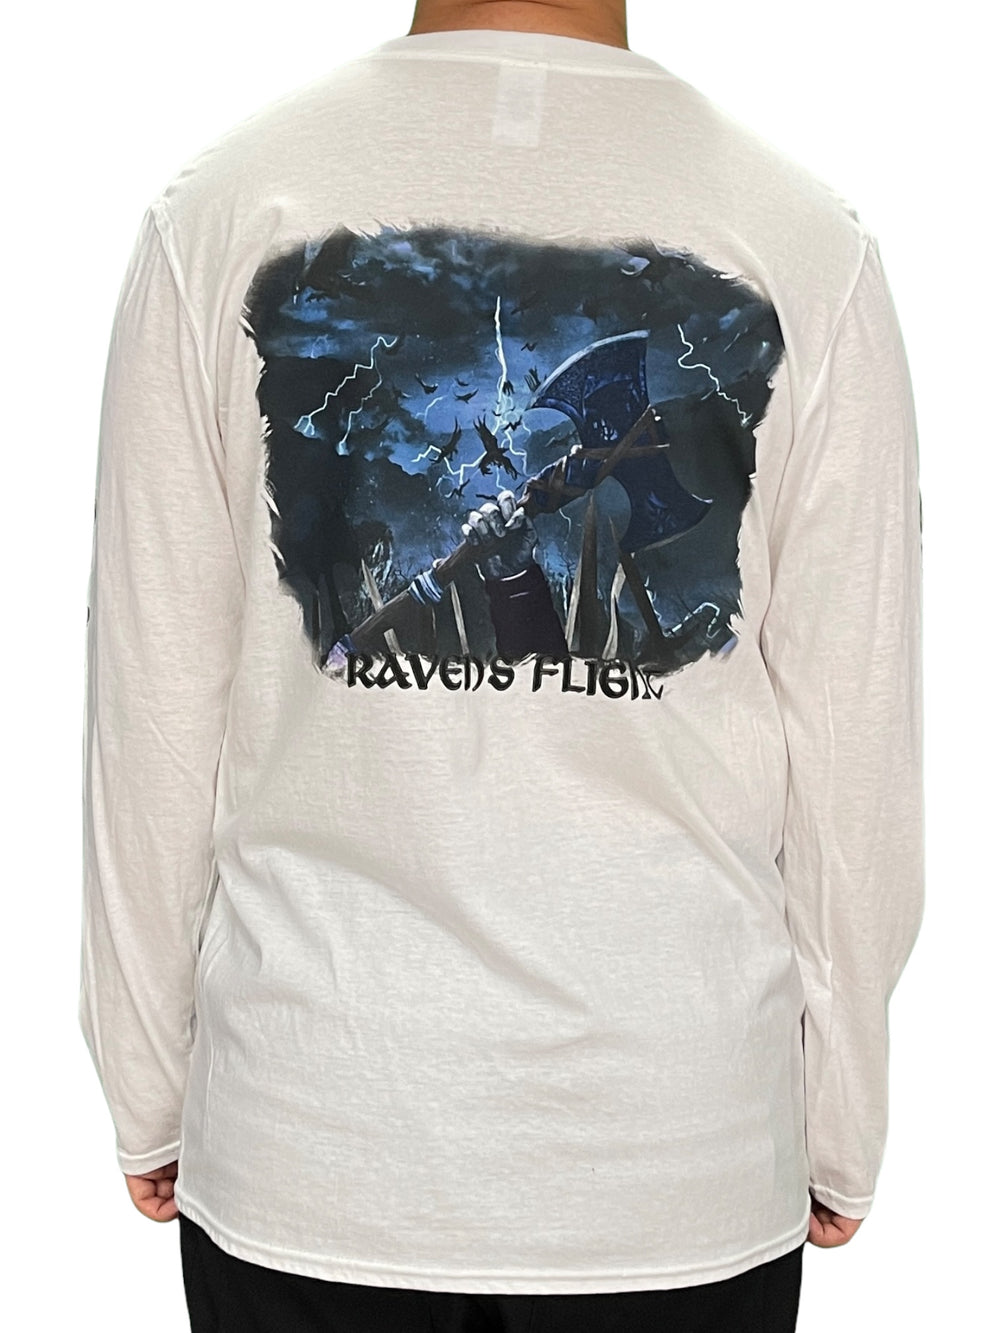 Amon Amarth Raven's Flight Long Sleeved Unisex Official T Shirt Brand New Various Sizes